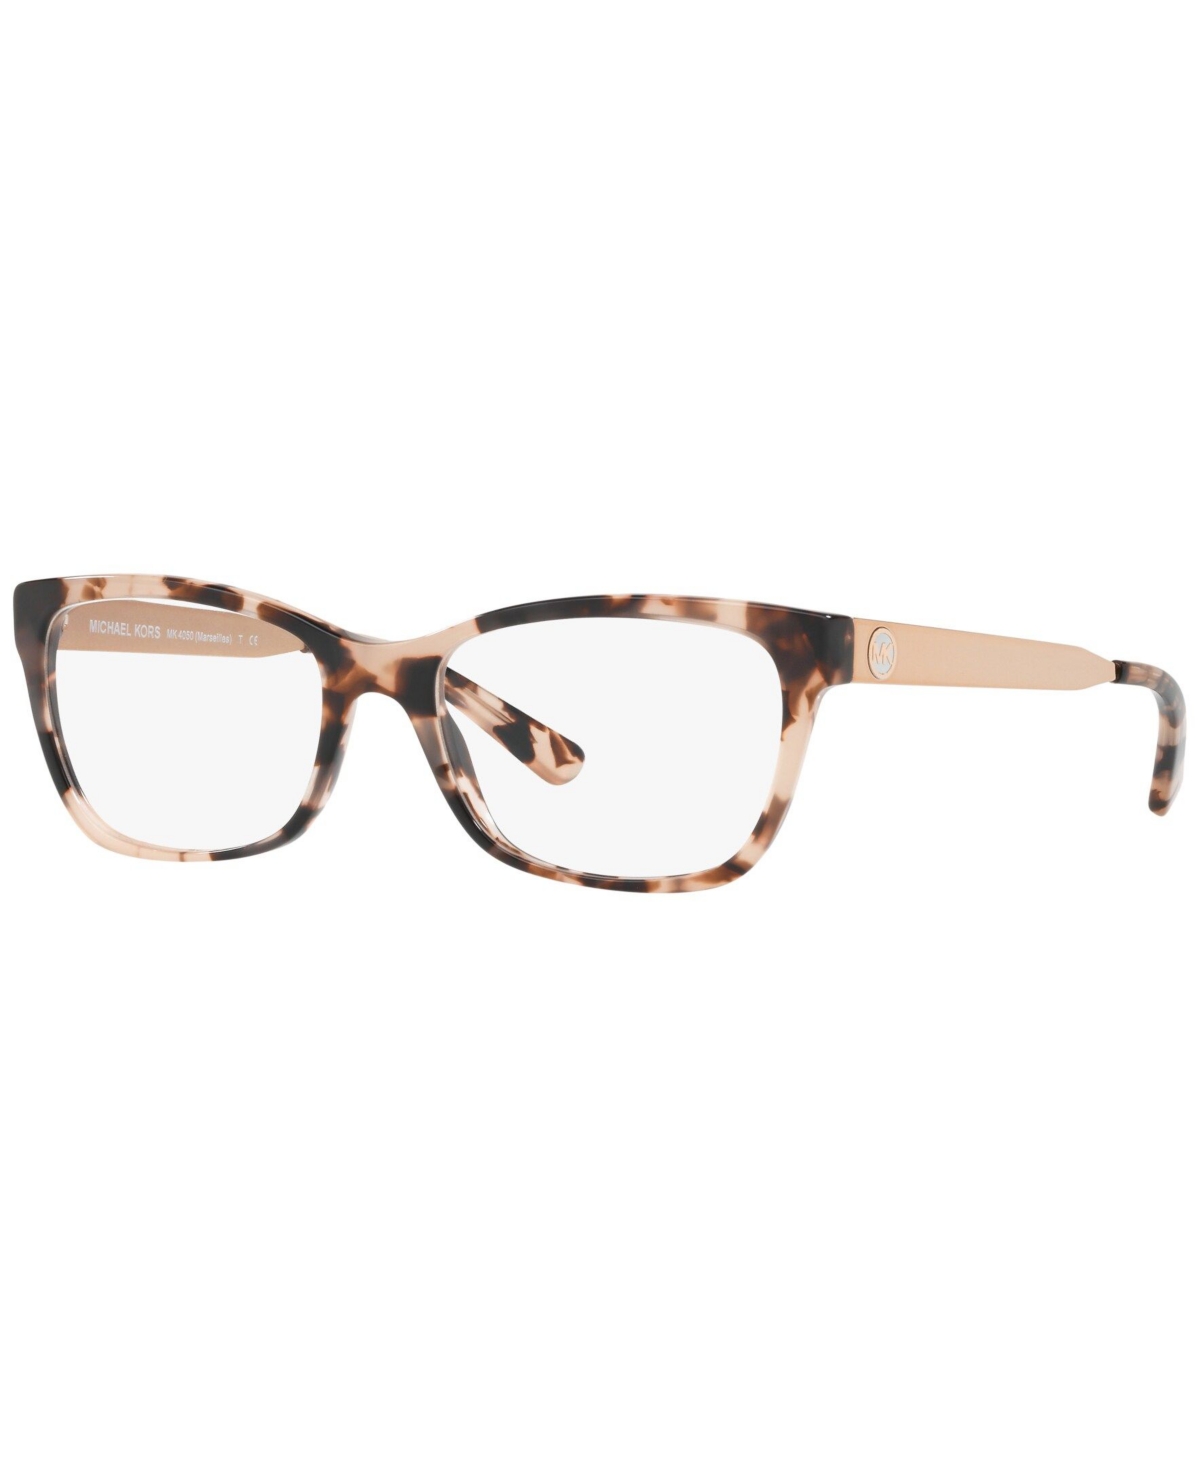 MK4050 Women's Square Eyeglasses - Pink Torto